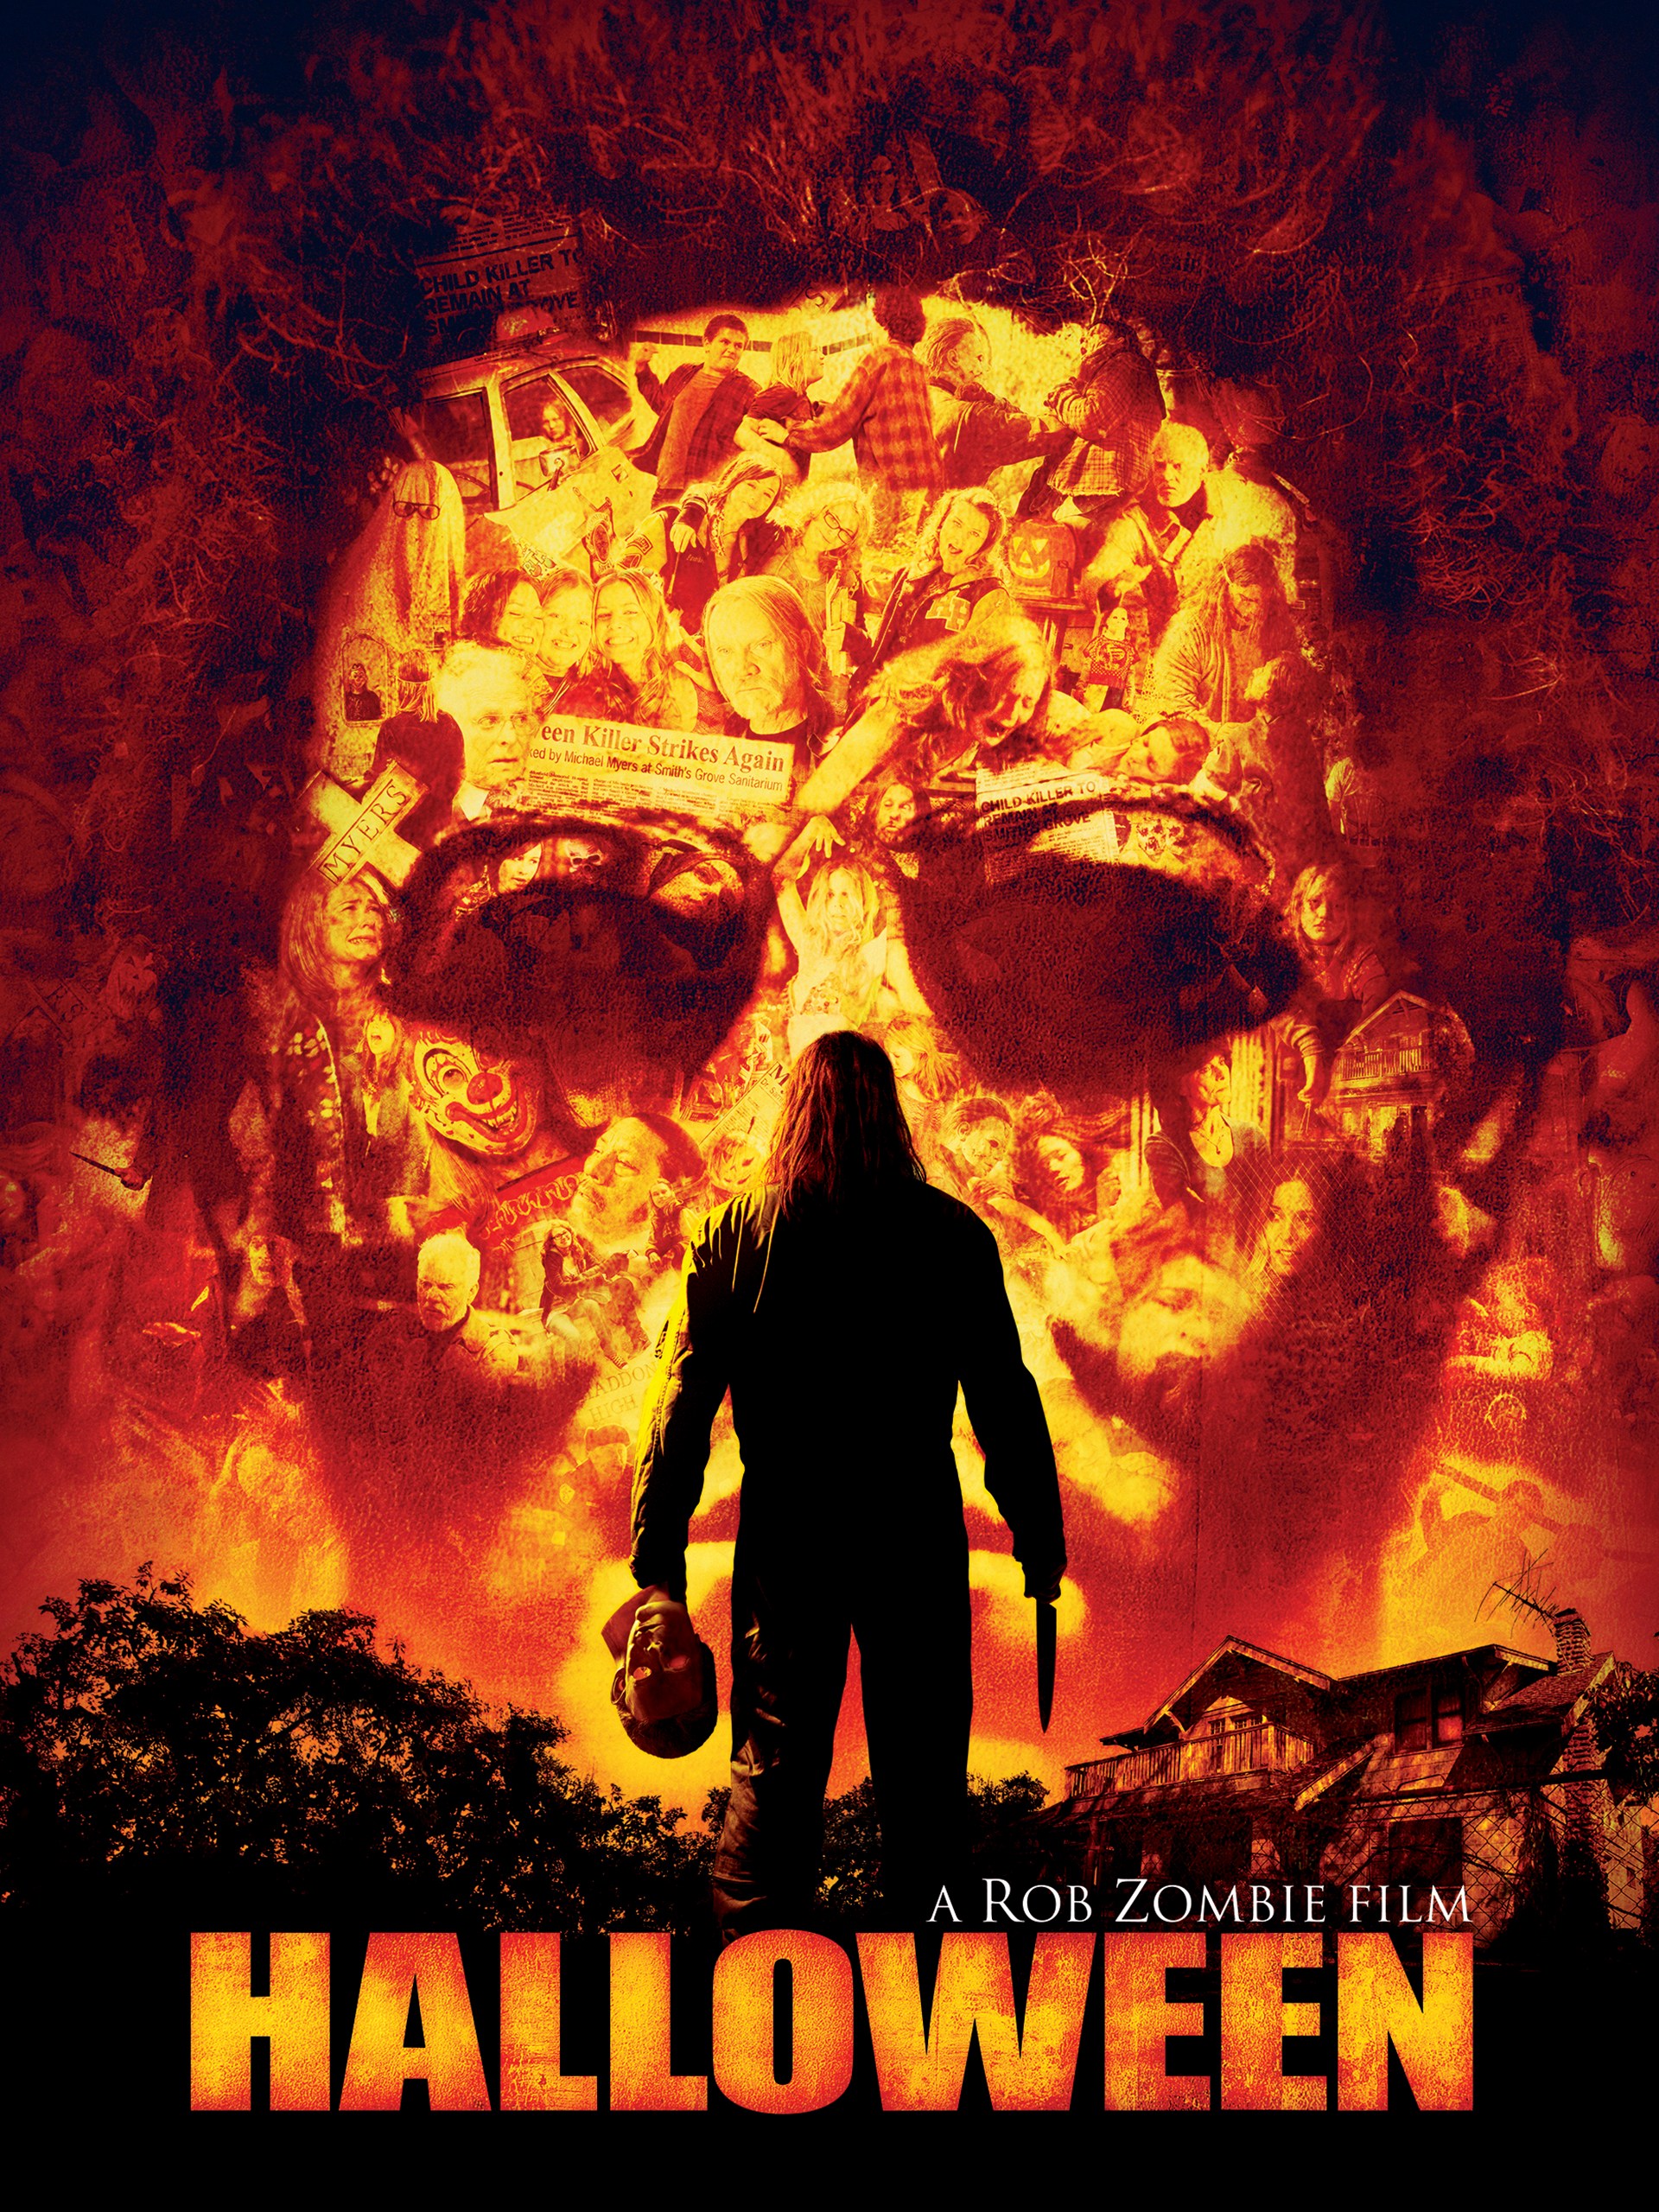 rob-zombies-halloween-2007-poster